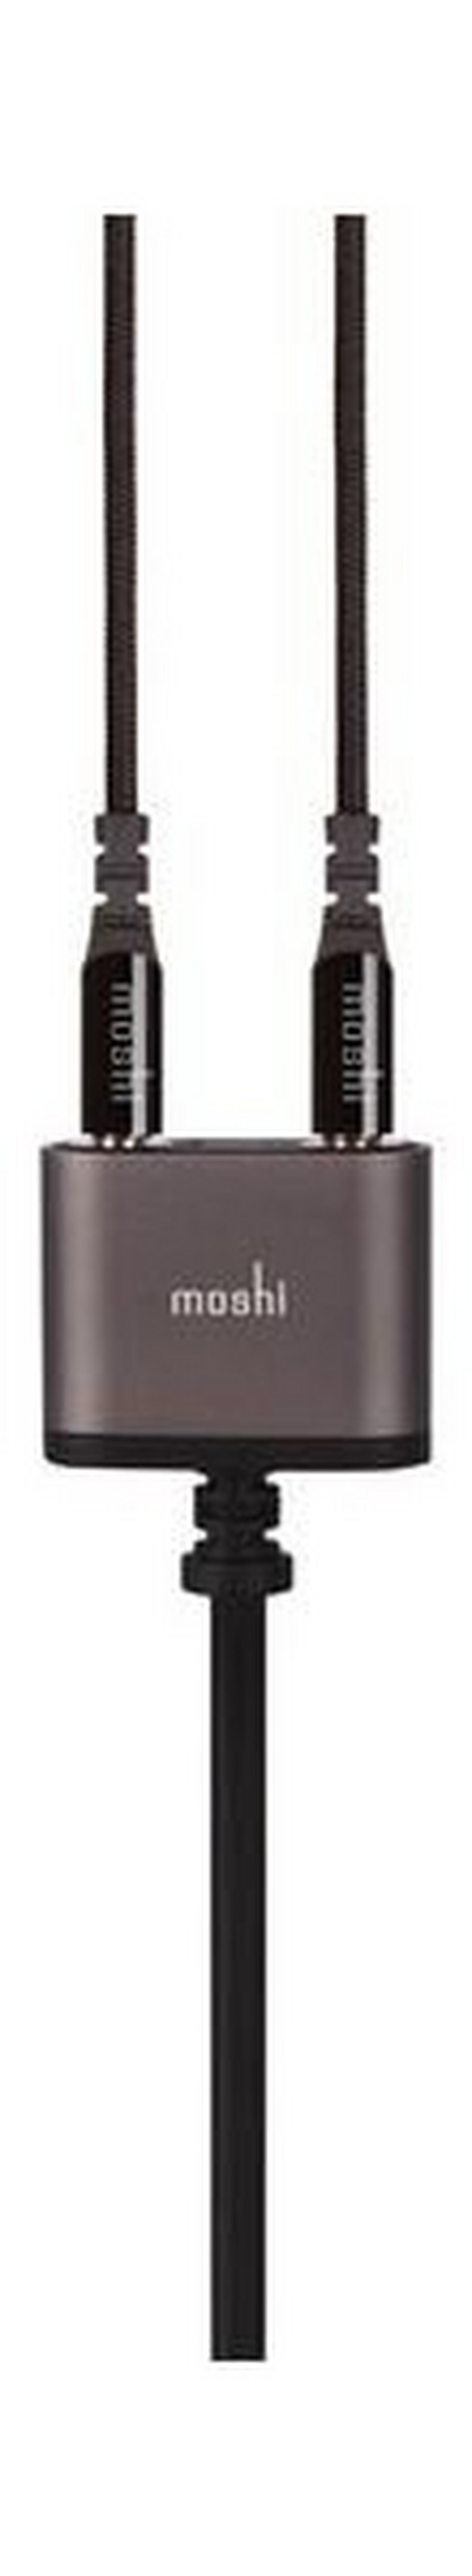 Moshi 3.5mm Audio to Jack Splitter 0.2m - Black